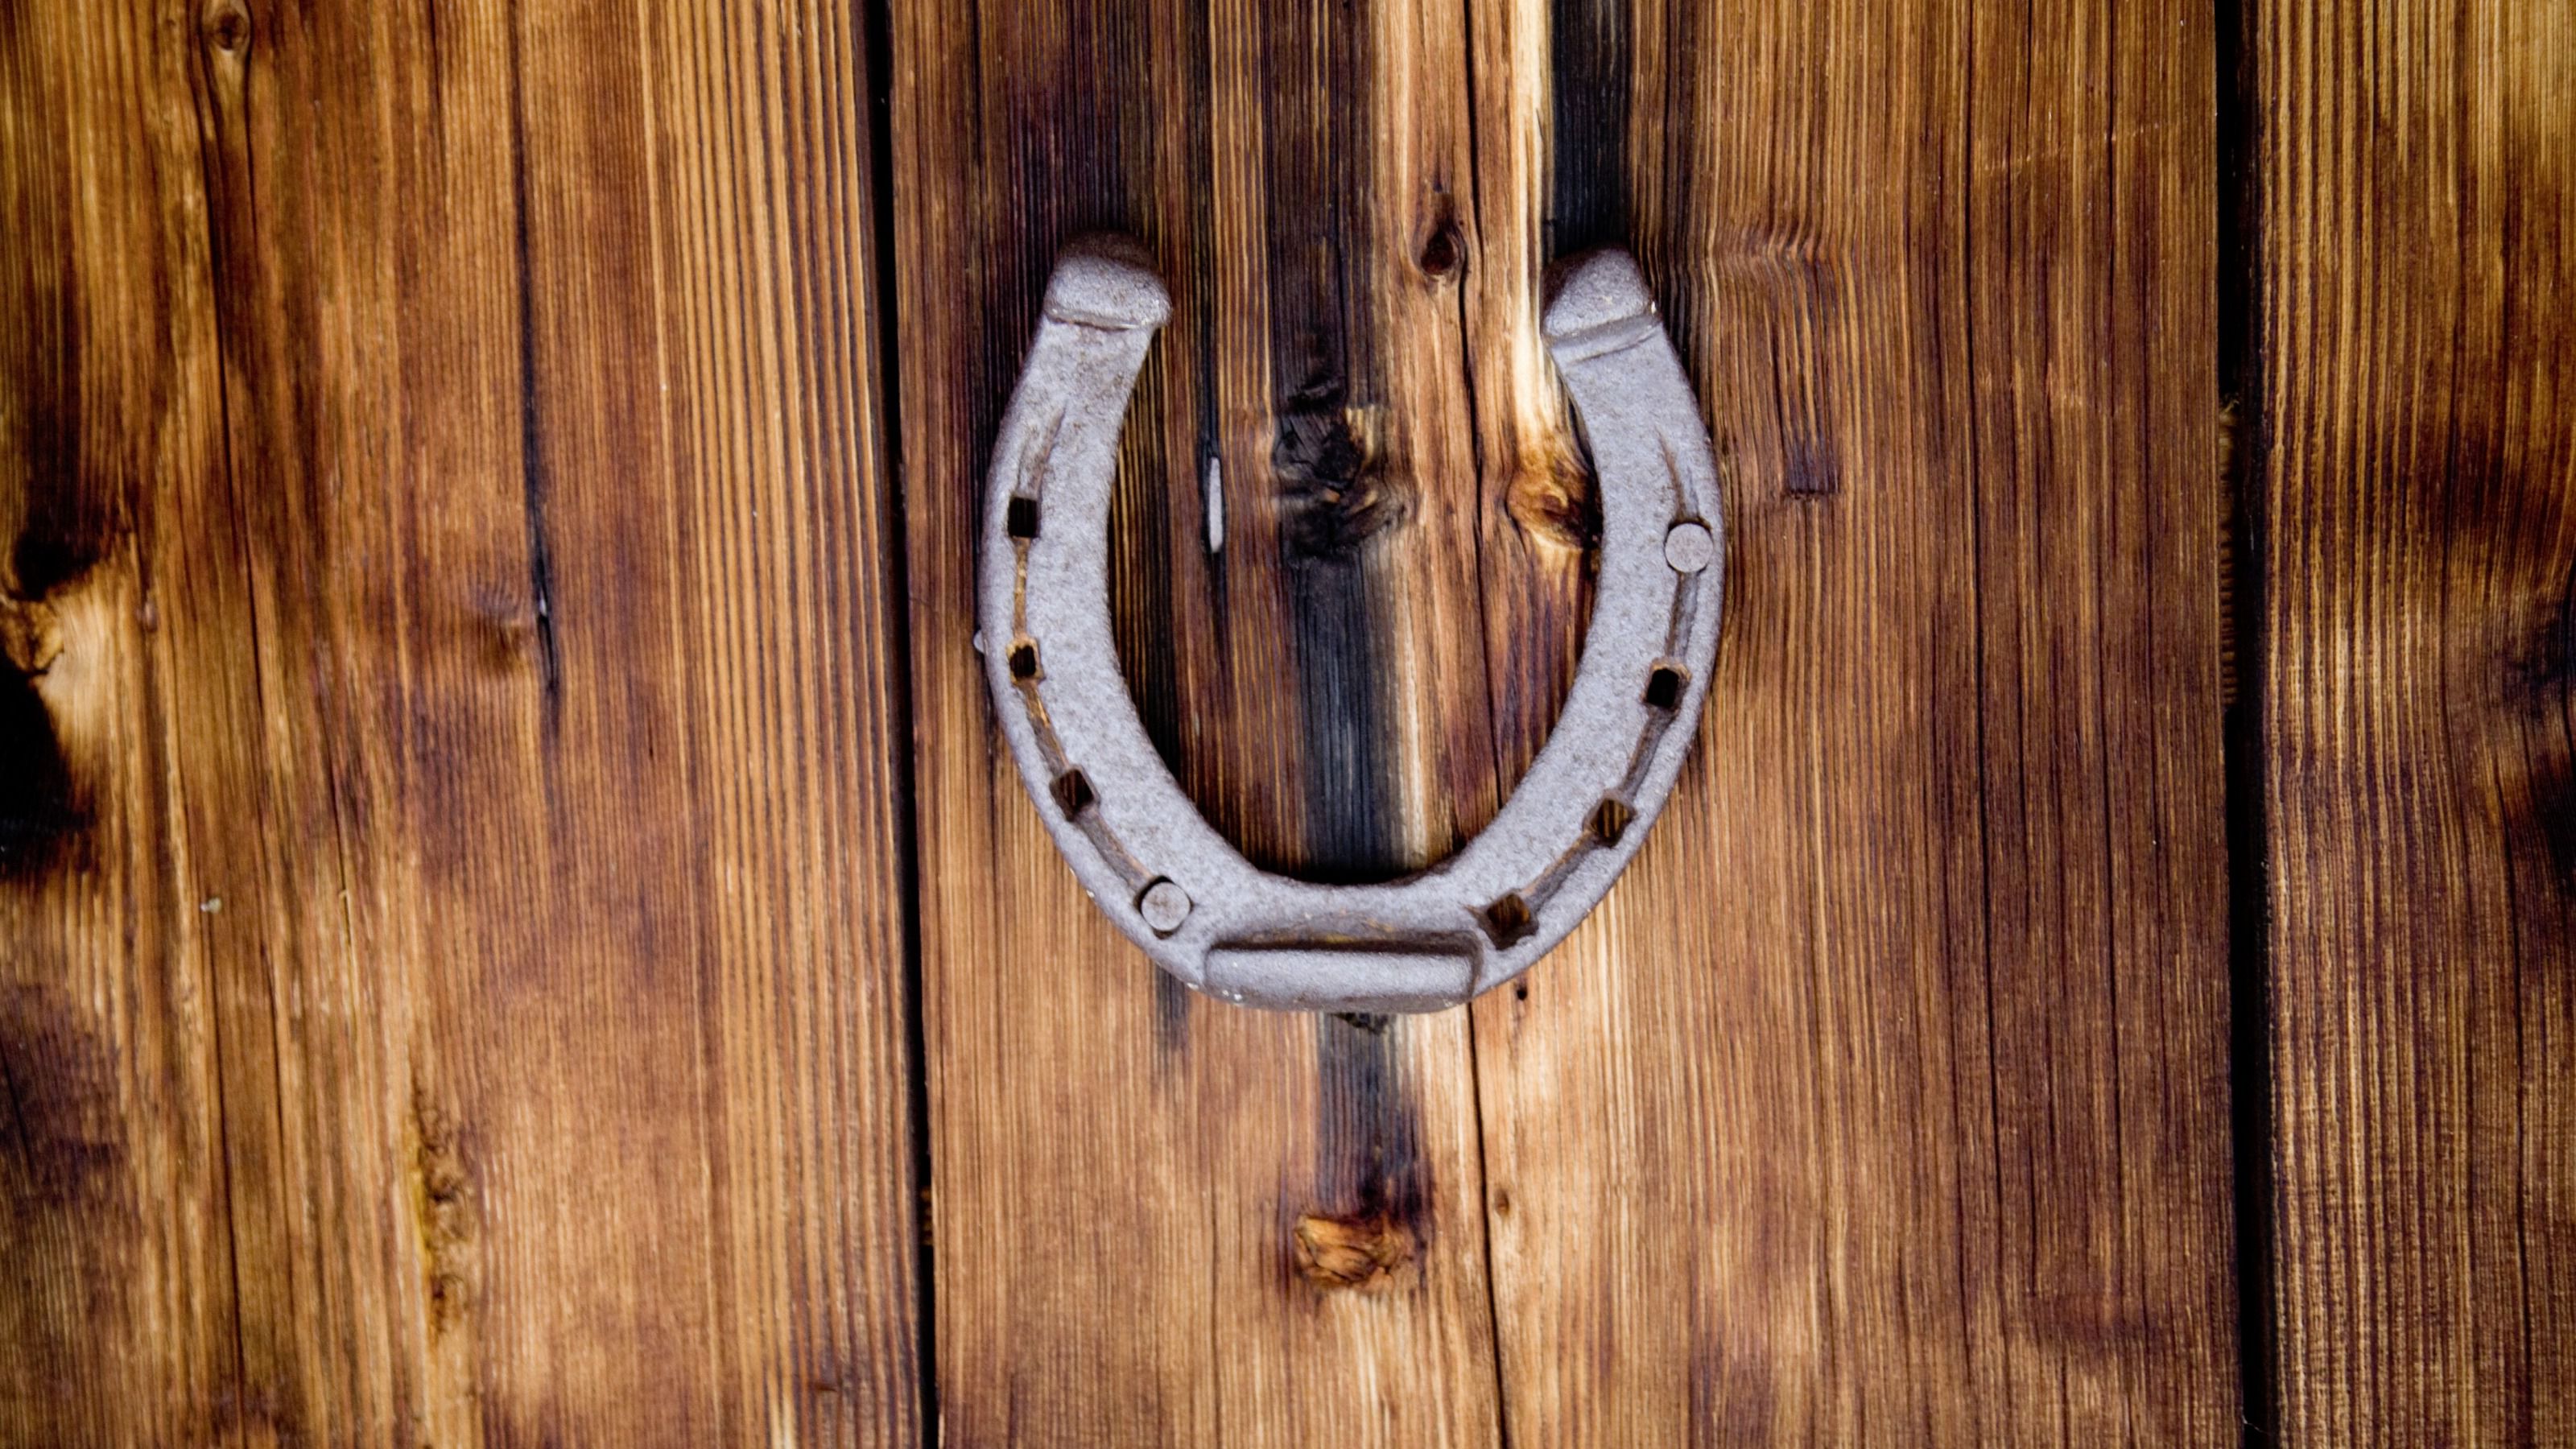 Horseshoe over the Door - a Talisman for good luck